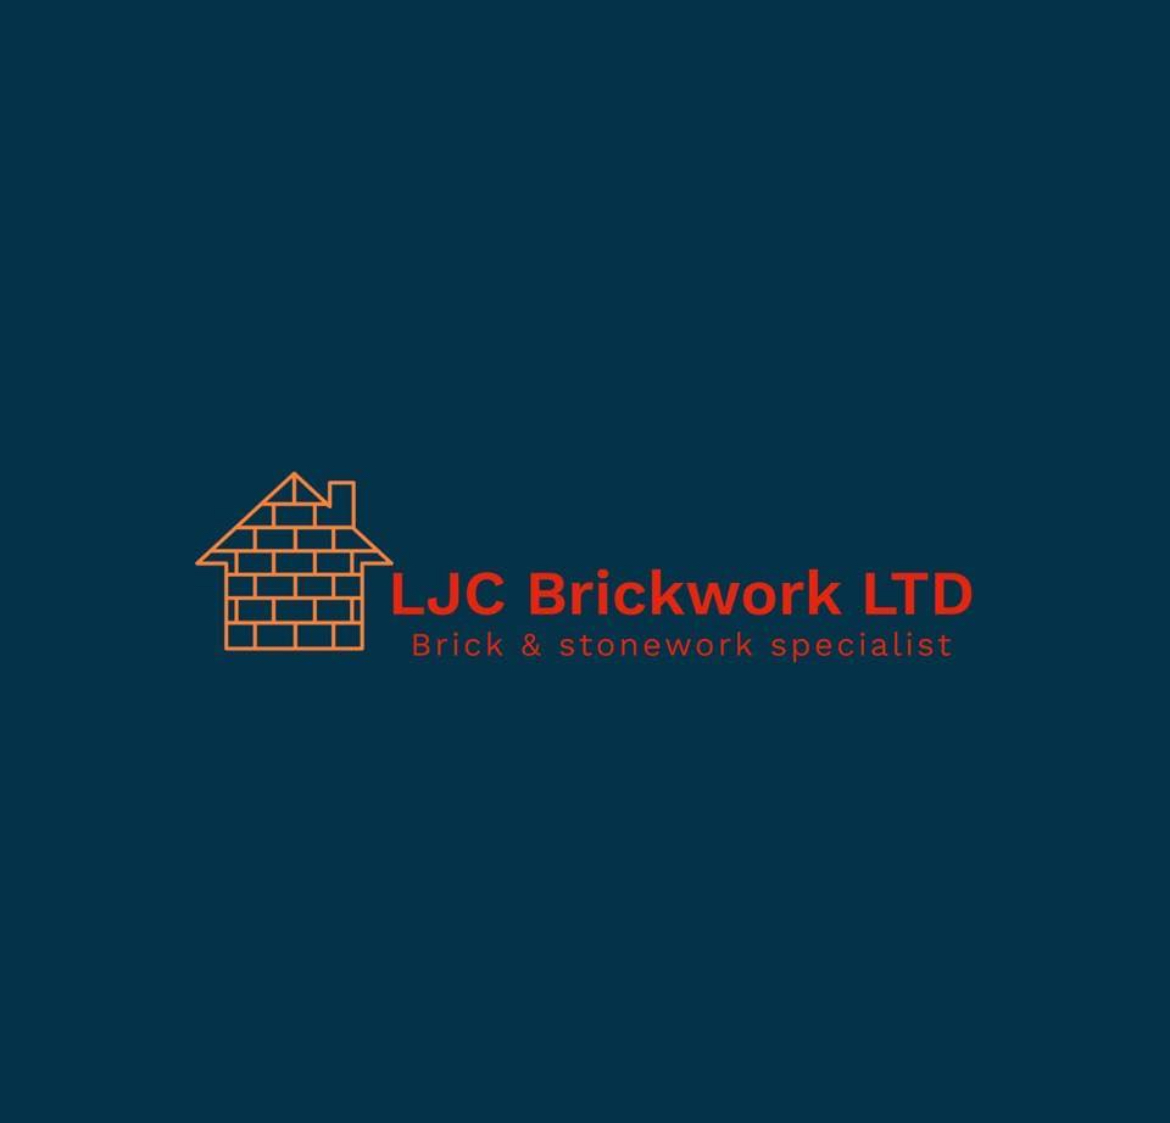 LJC Brickwork Ltd